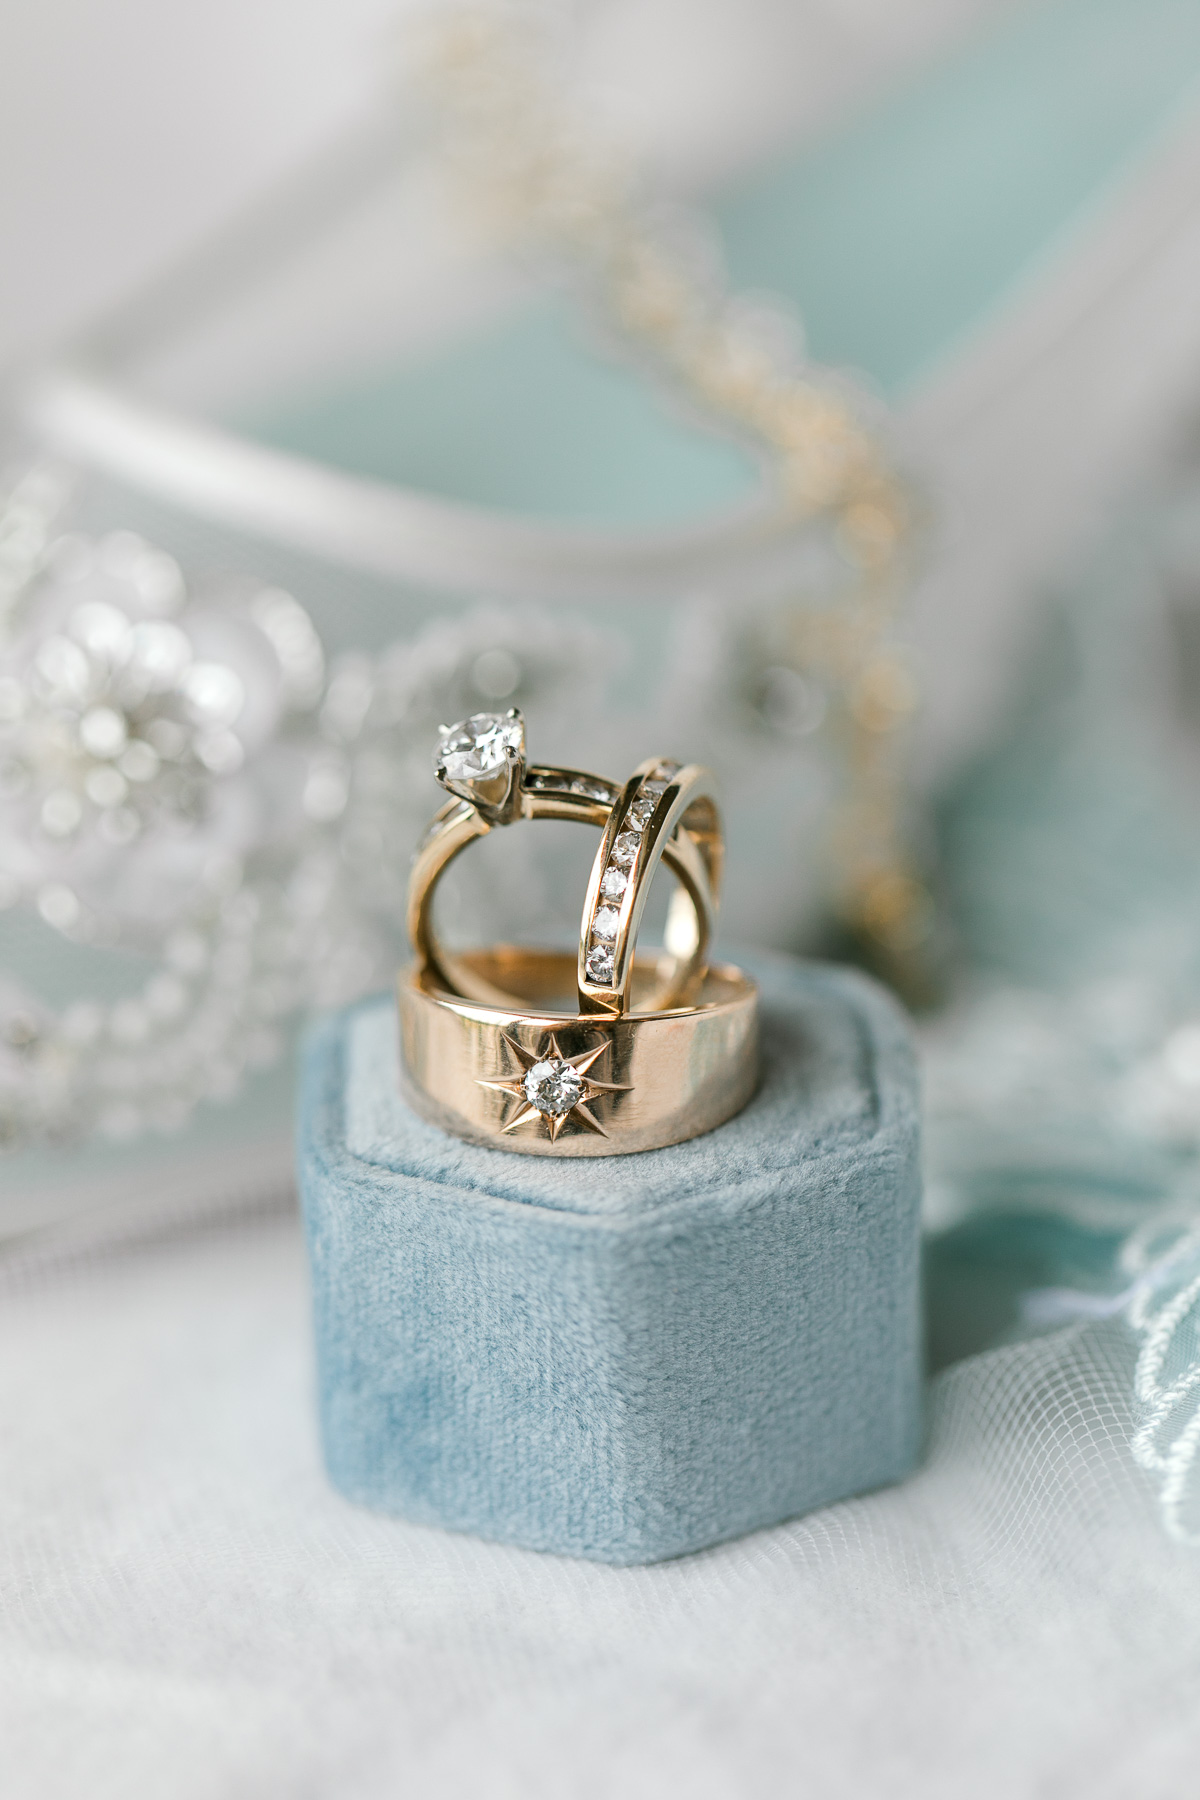 Gold and diamond wedding rings